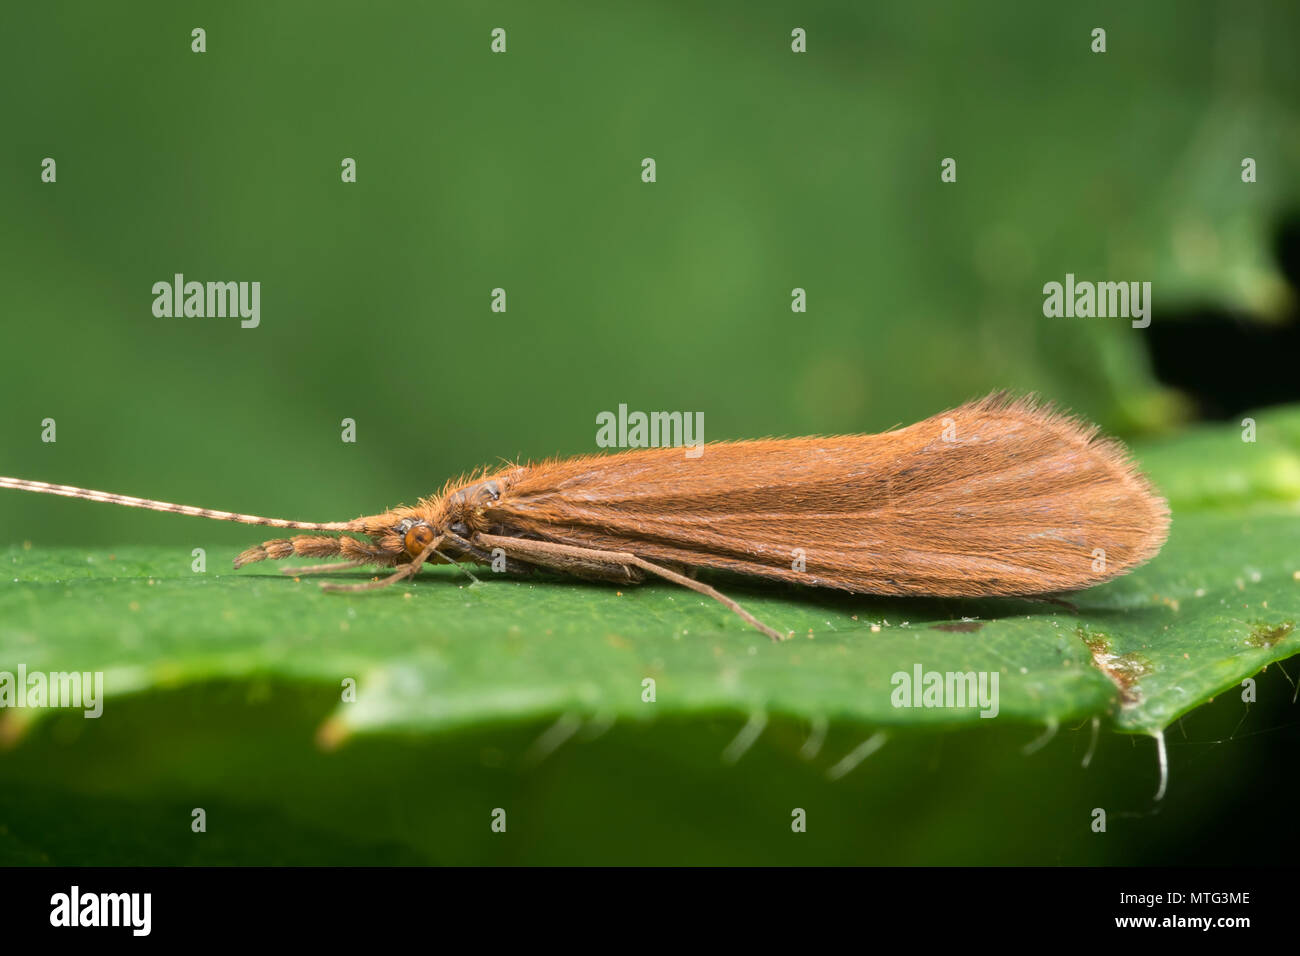 Caddisfly auf Blatt in Feuchtgebieten Lebensraum. Tipperary, Irland Stockfoto